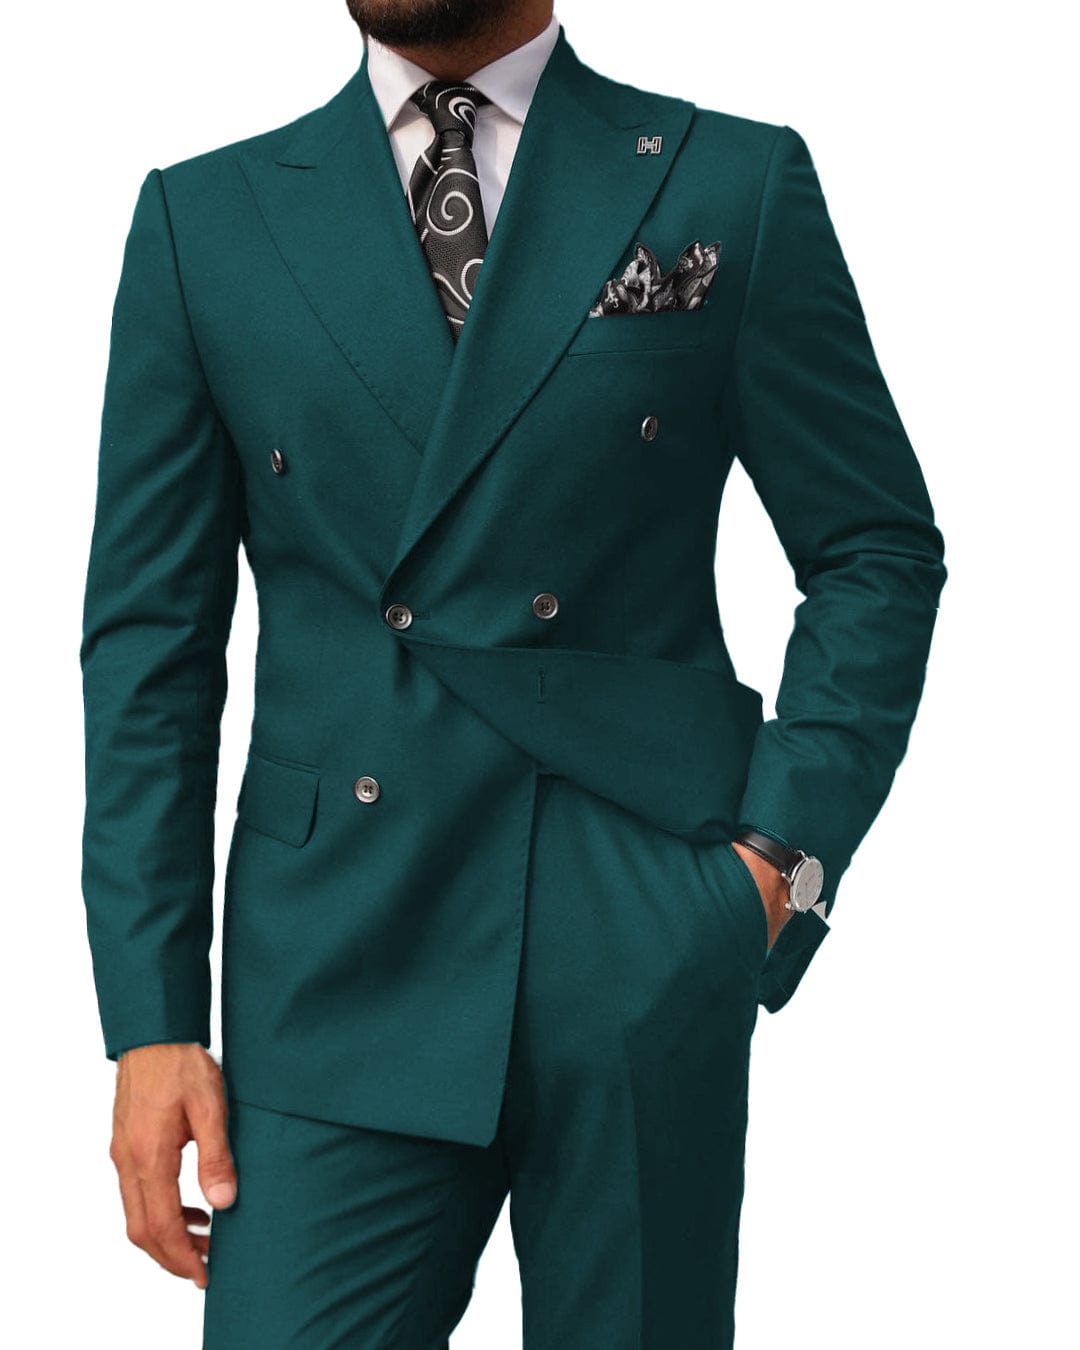 ceehuteey Men's 2 pieces Suit Slim Fit Flat Double Breasted Peak Lapel Tuxedos(Blazer+Pants)